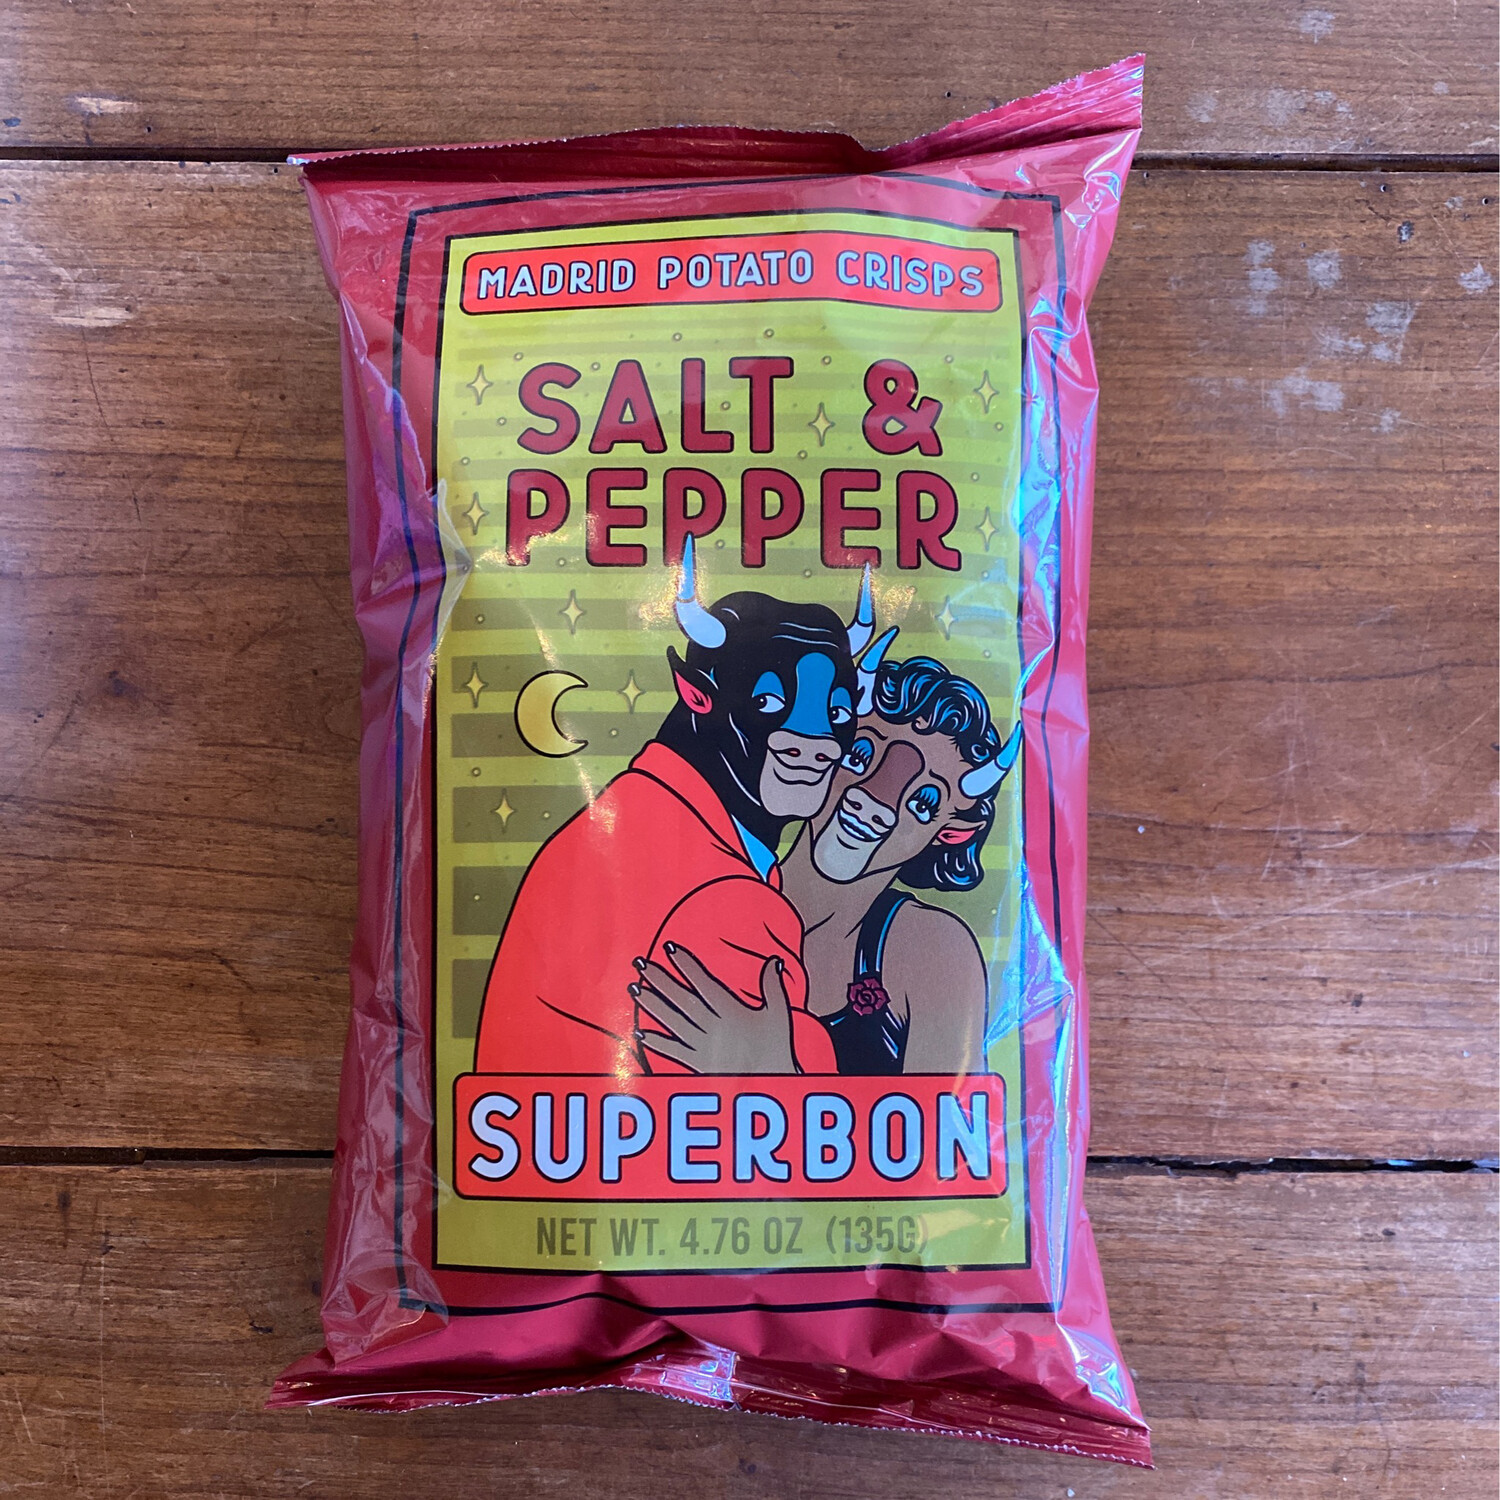 Superbon Salt & Pepper Potato Chips